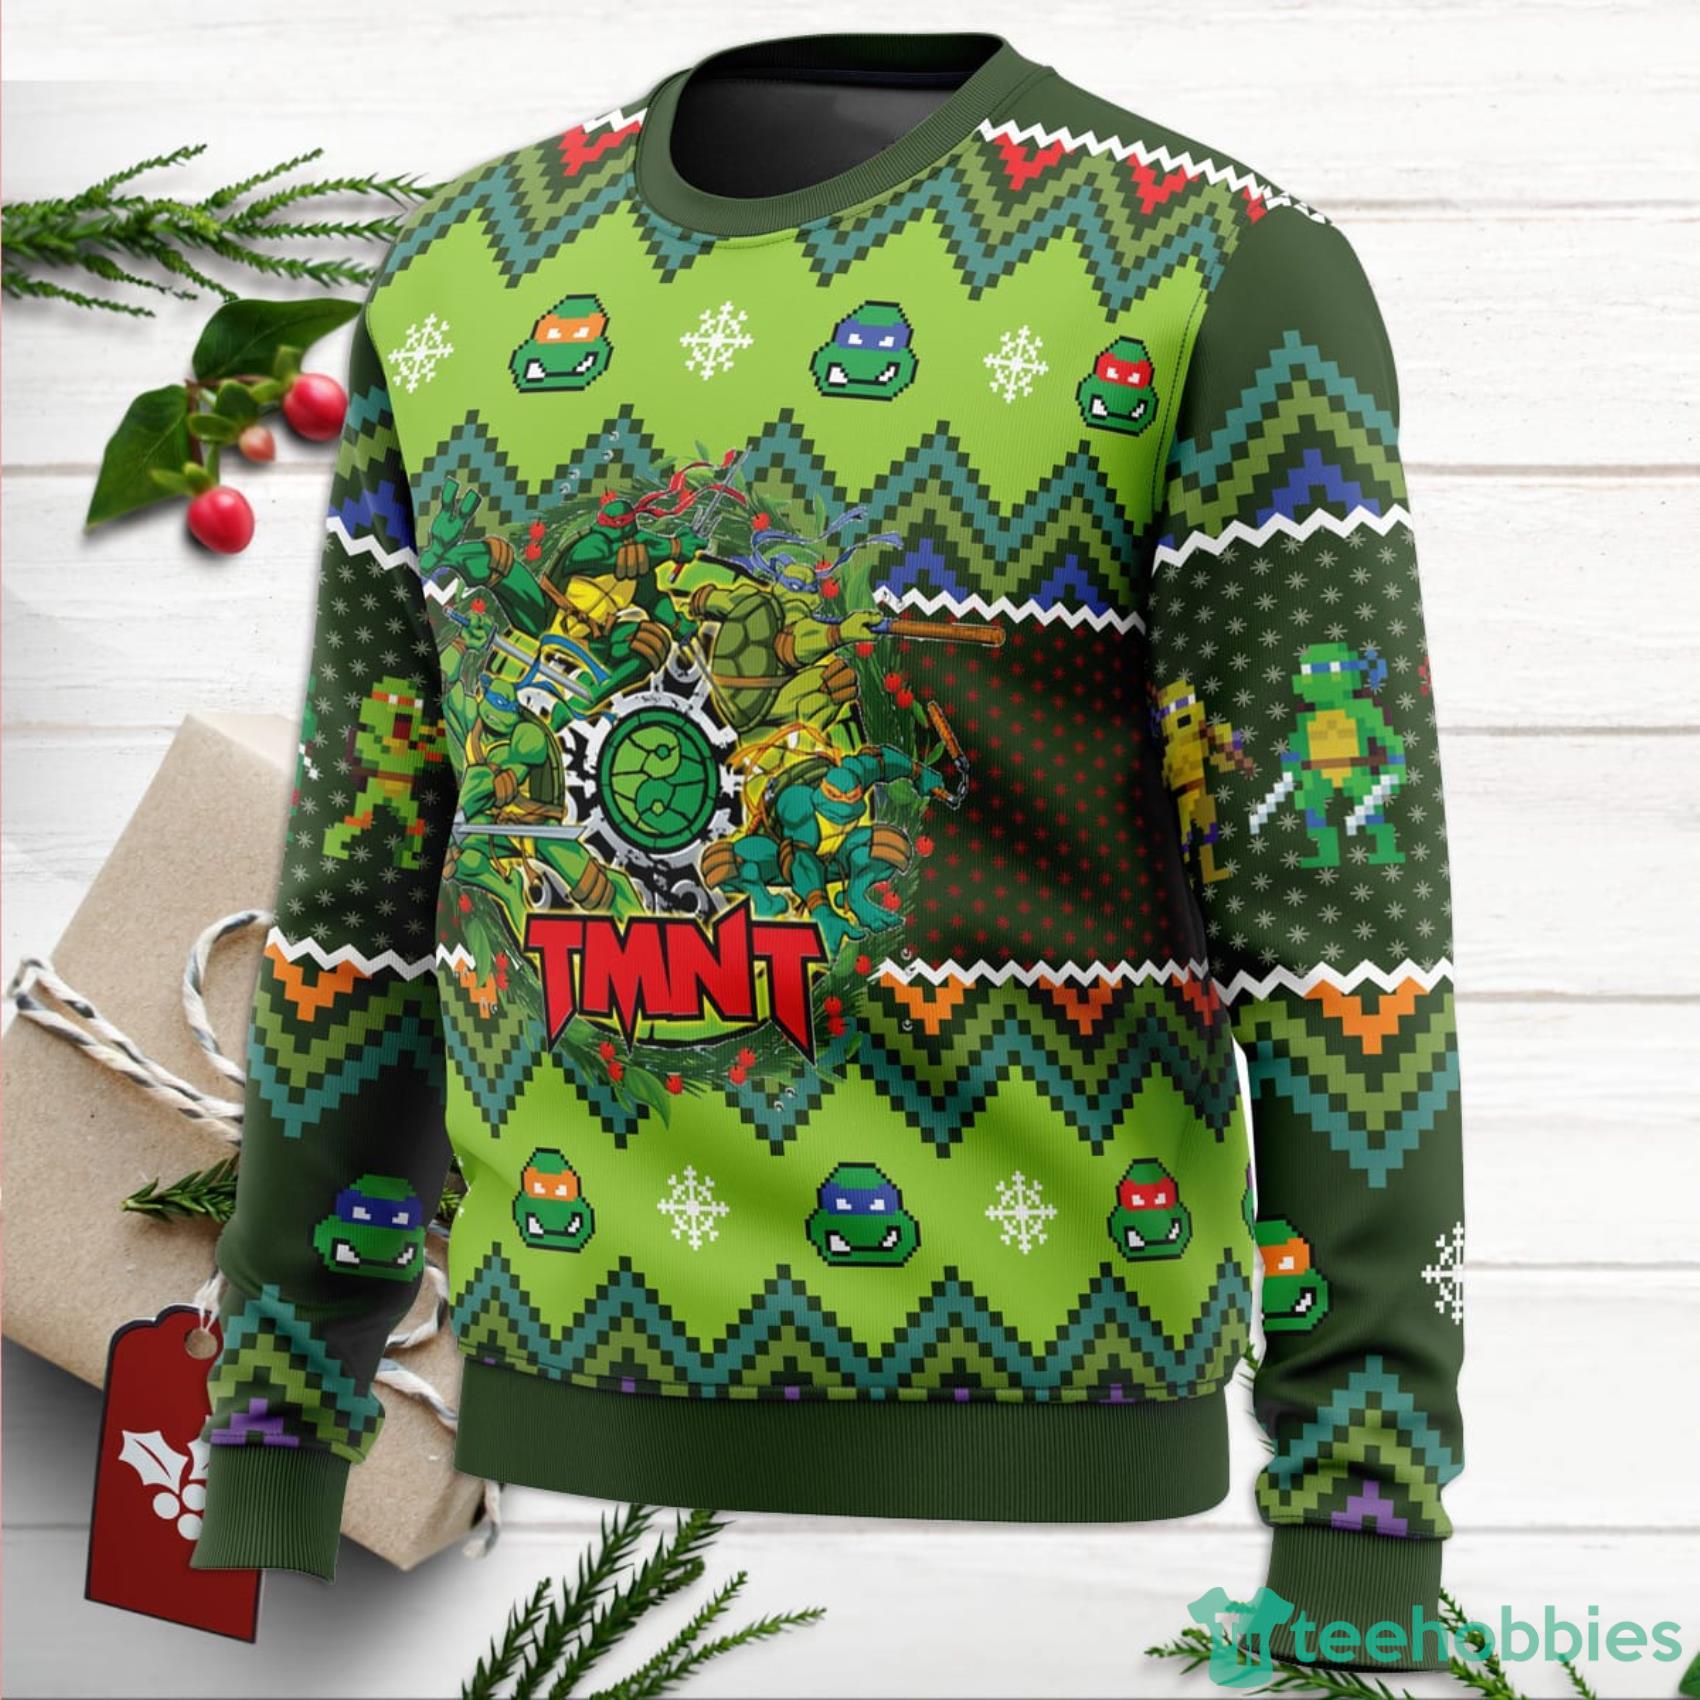 https://image.teehobbies.us/2022/11/teenage-mutant-ninja-turtles-ugly-christmas-sweater-for-men-and-women-1.jpg